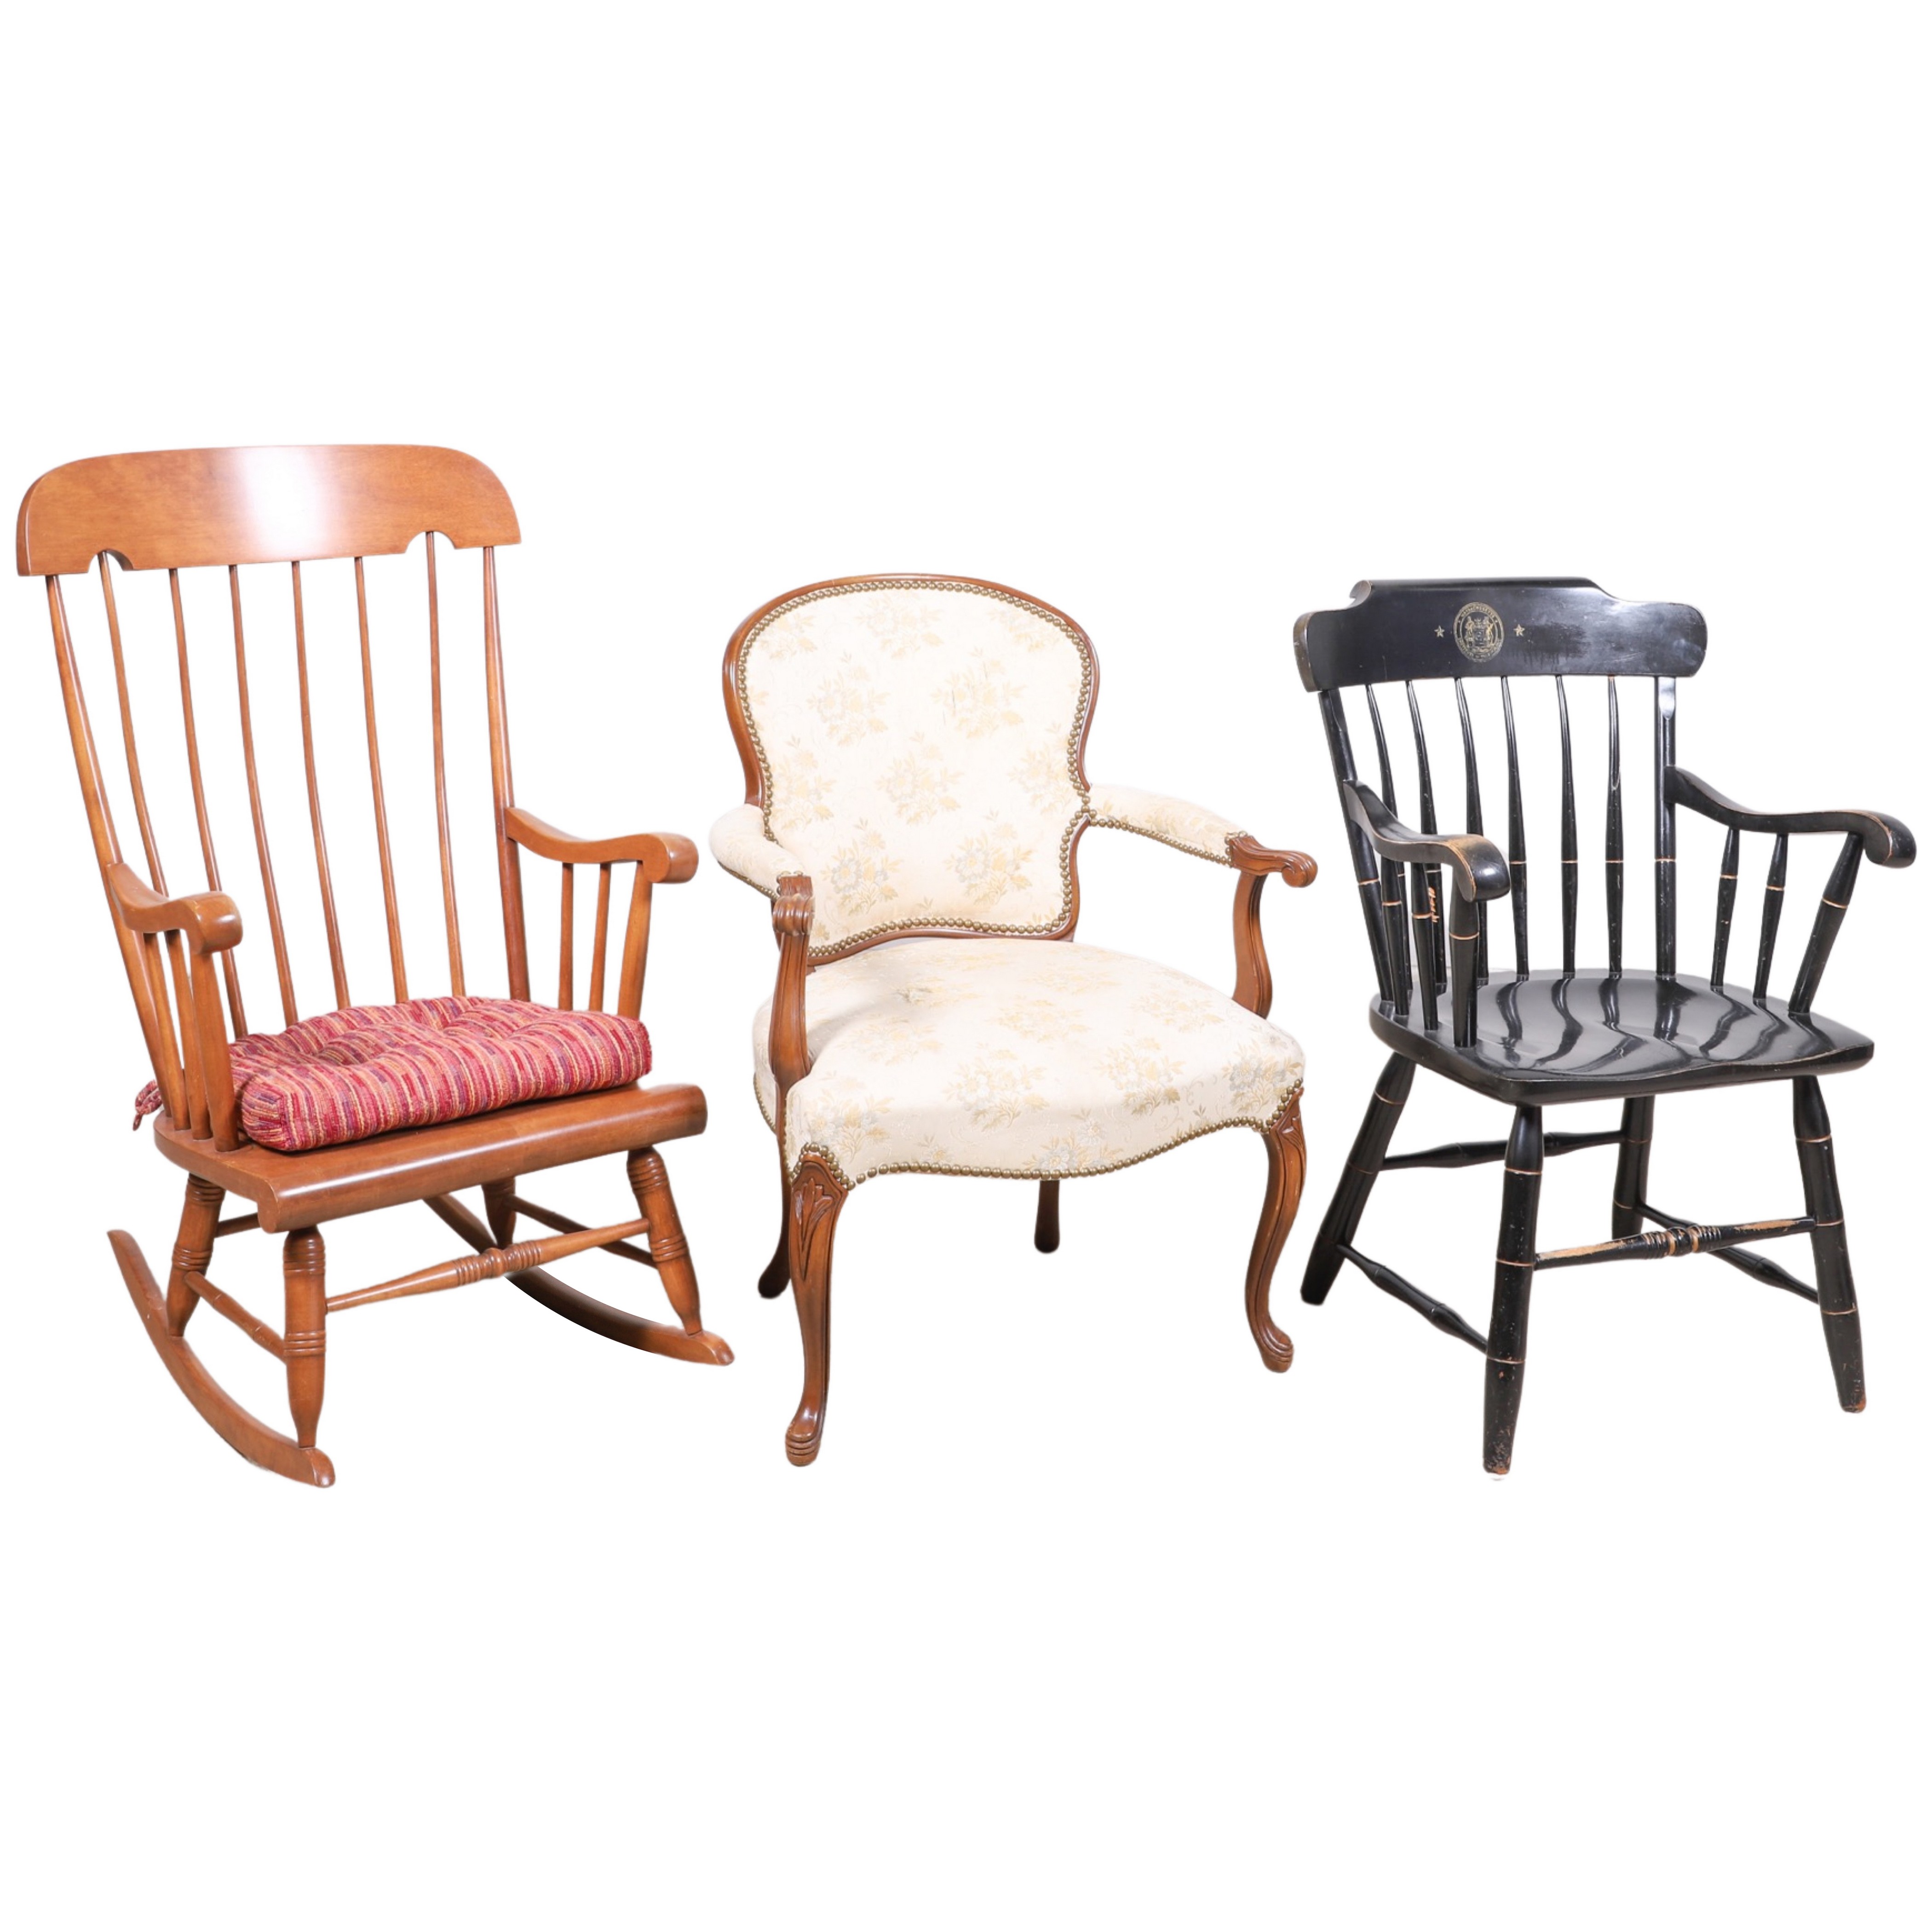  3 Decorative armchairs c o Massachusetts 3b4ba6